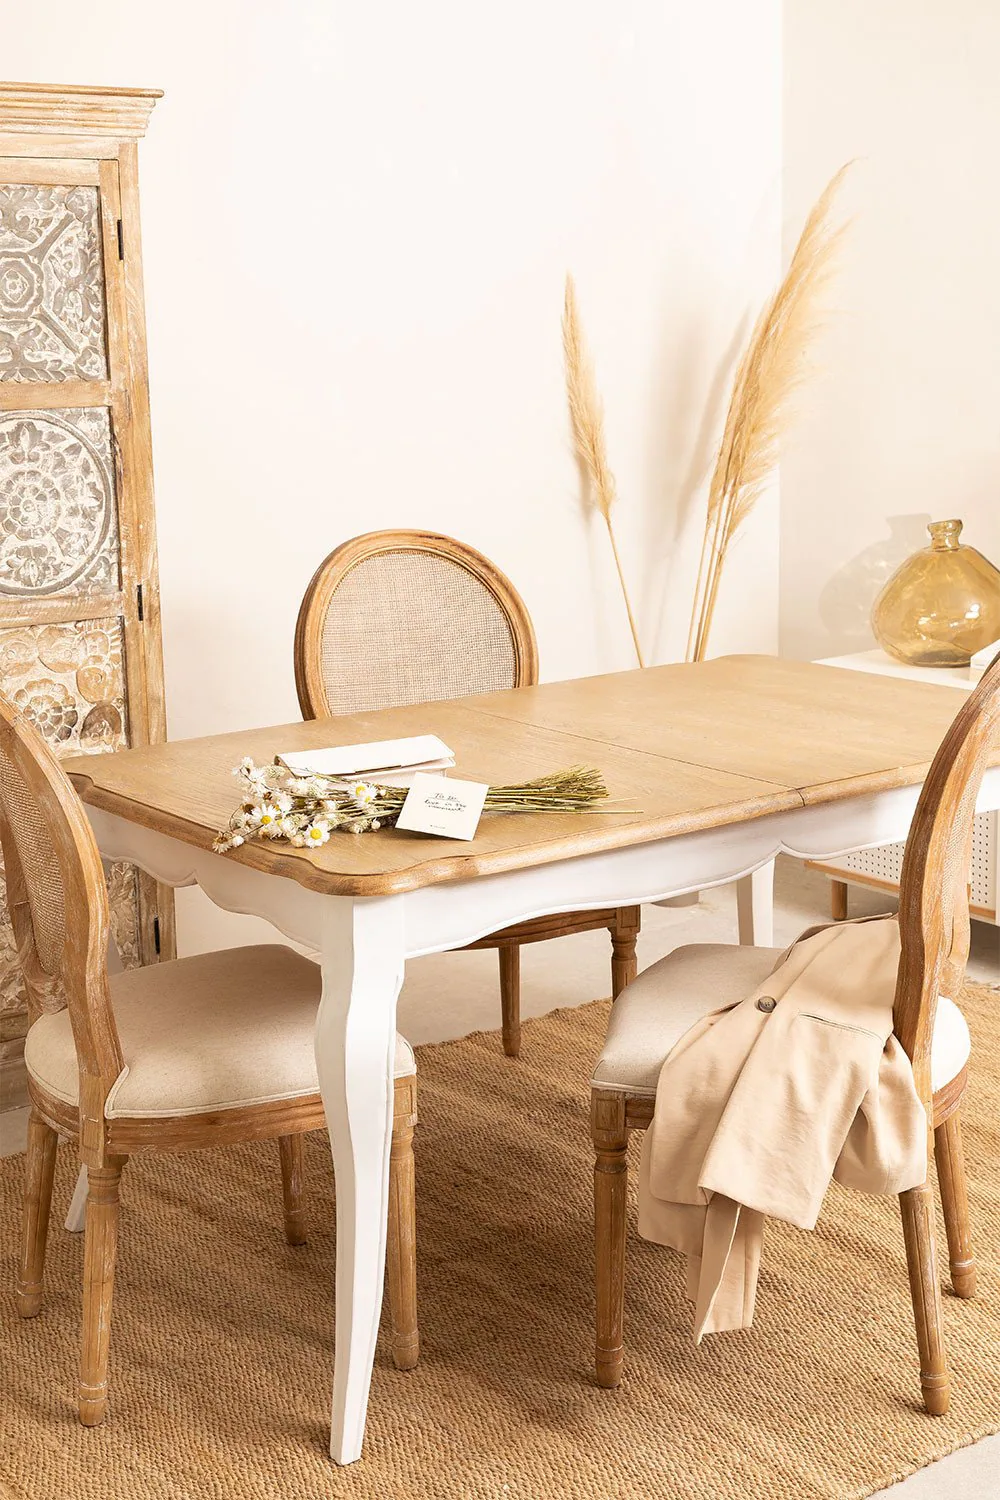 Mesas de comedor o salón: baratas y modernas - SKLUM